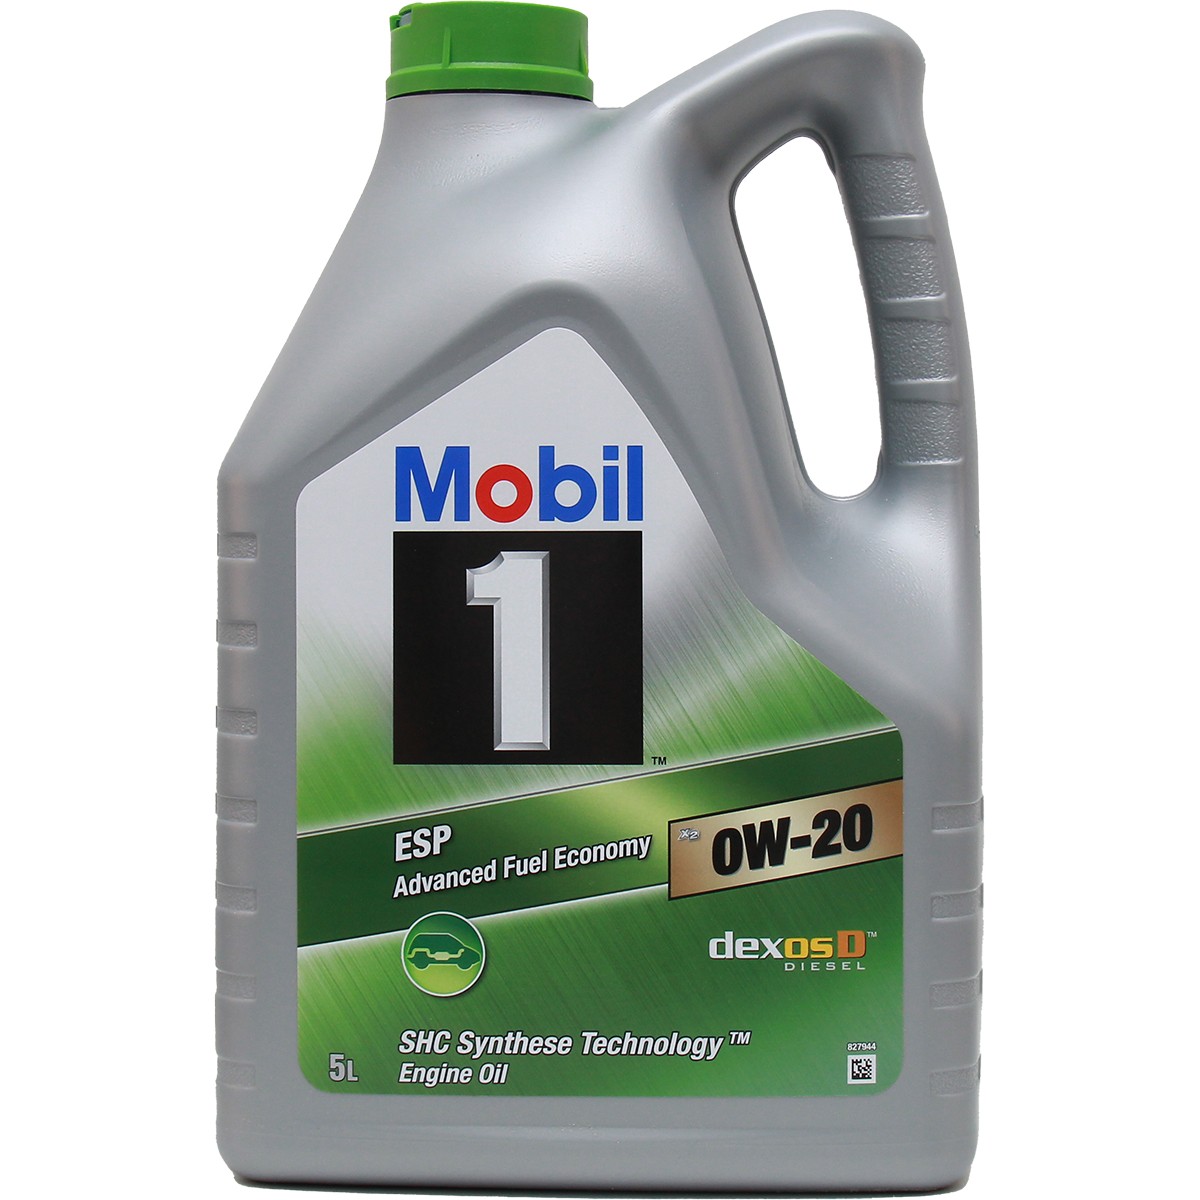 MOBIL ESP x2 0W-20, 5l, Synthetic Oil Motor oil 153684 buy